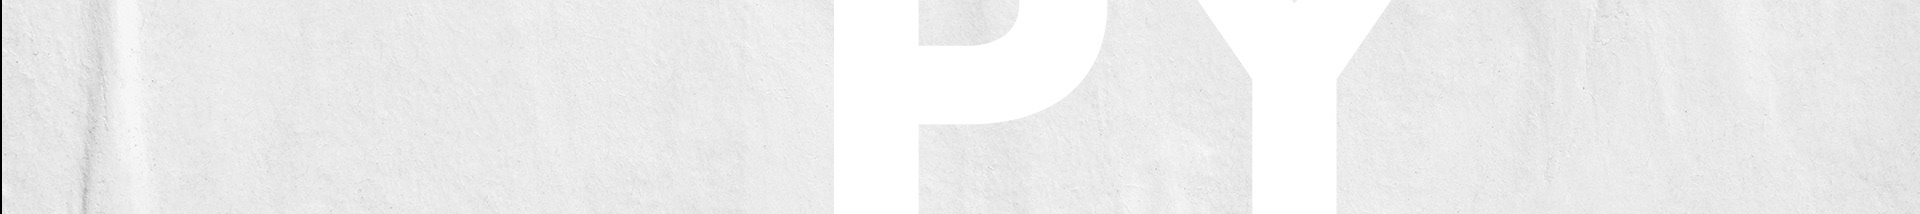 PYxel -'s profile banner